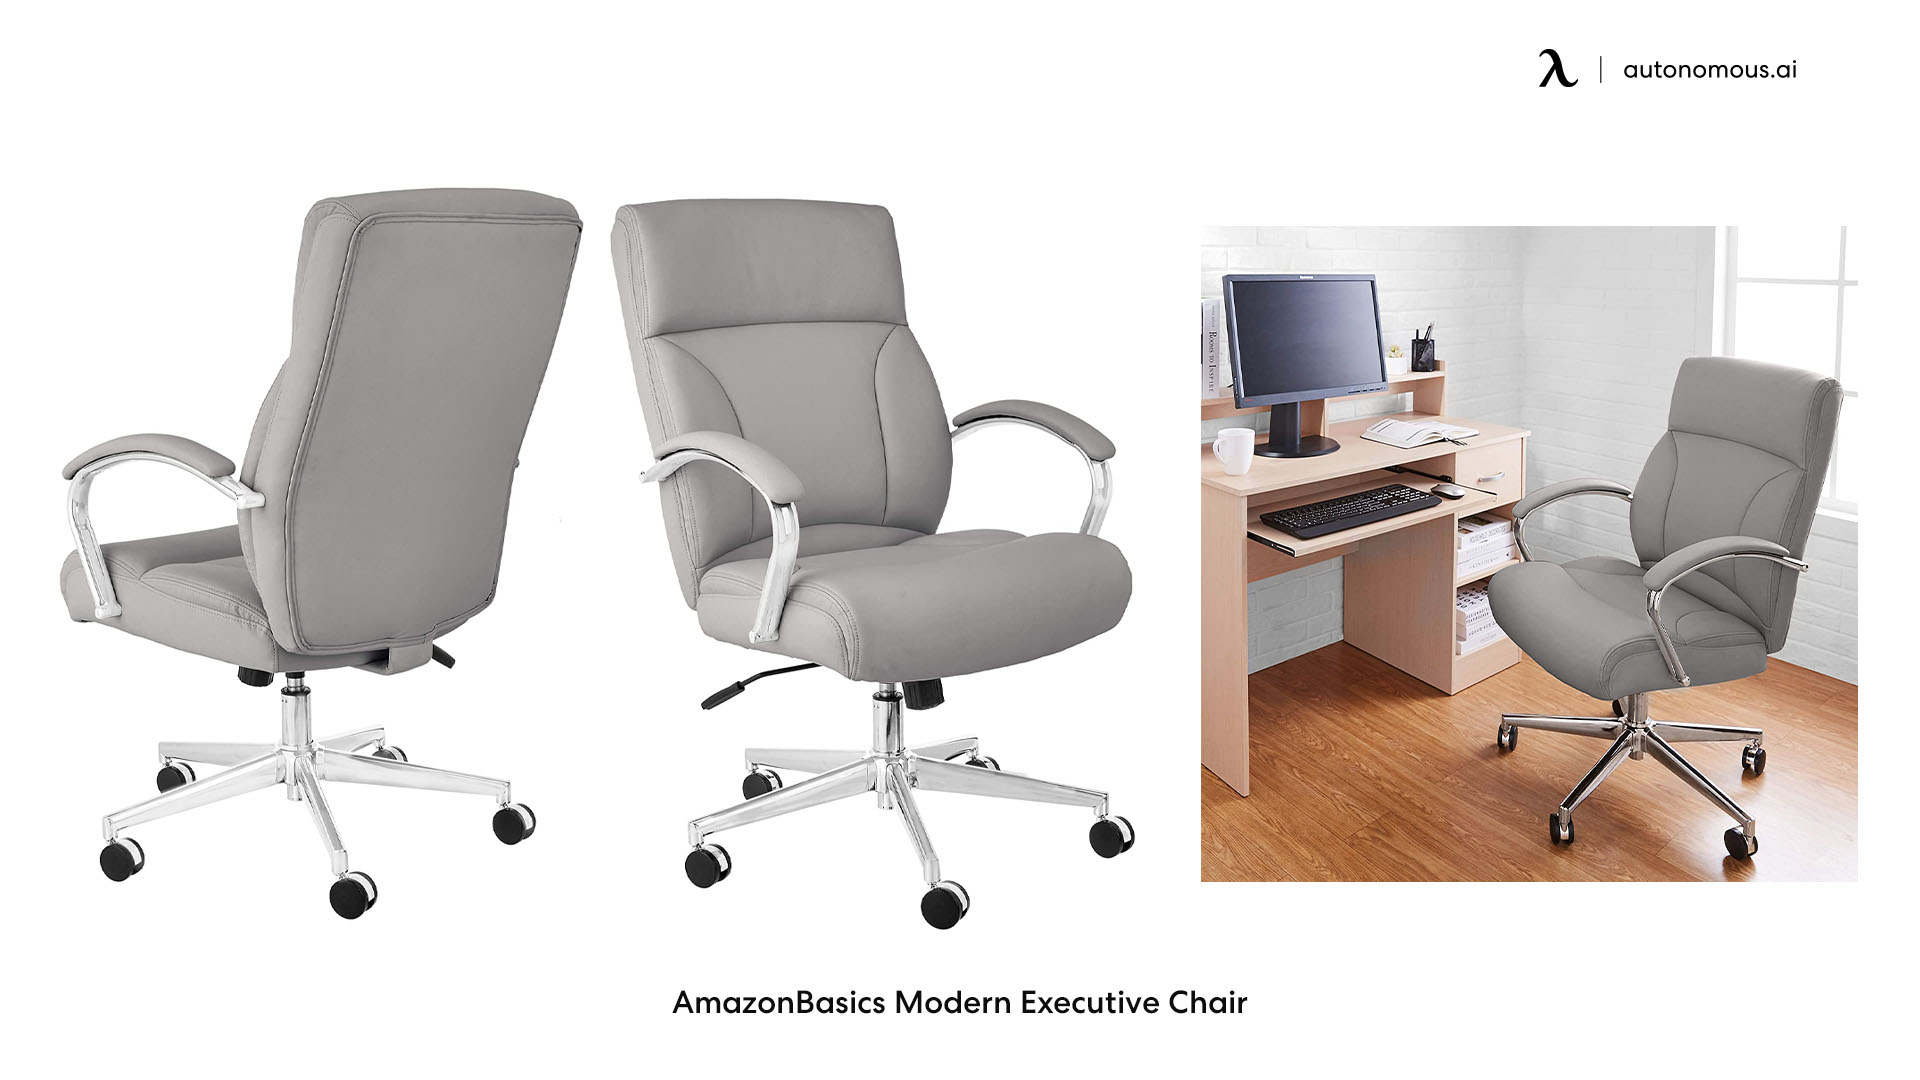 AmazonBasics Modern Executive Chair